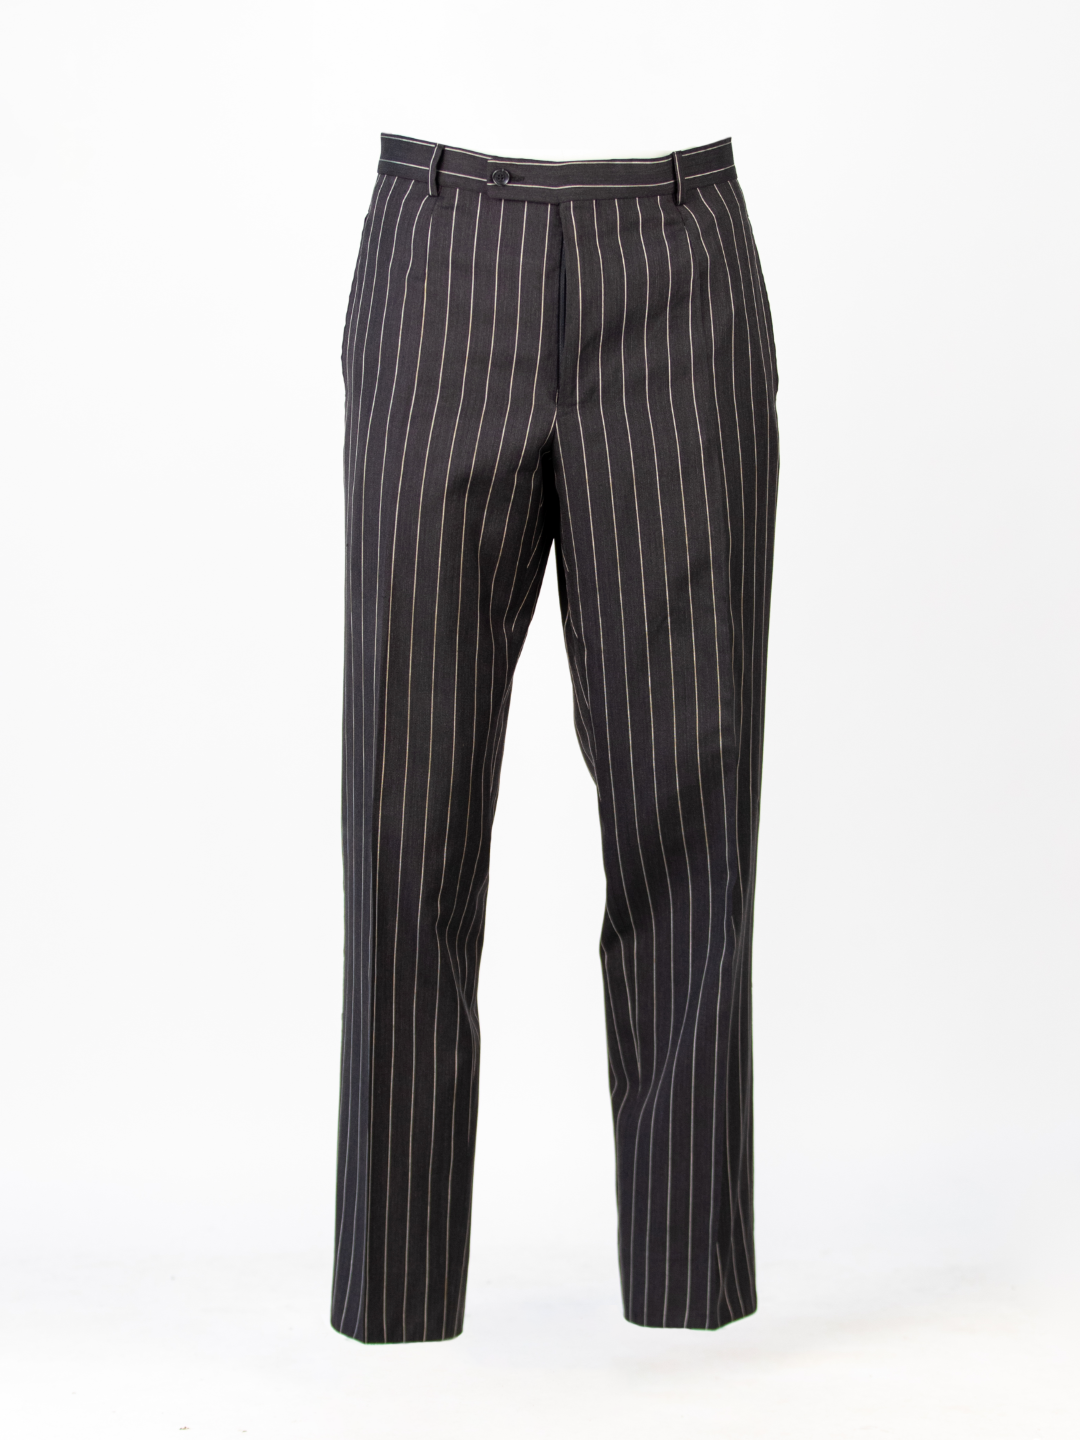 Coloured Pin Stripe Suit